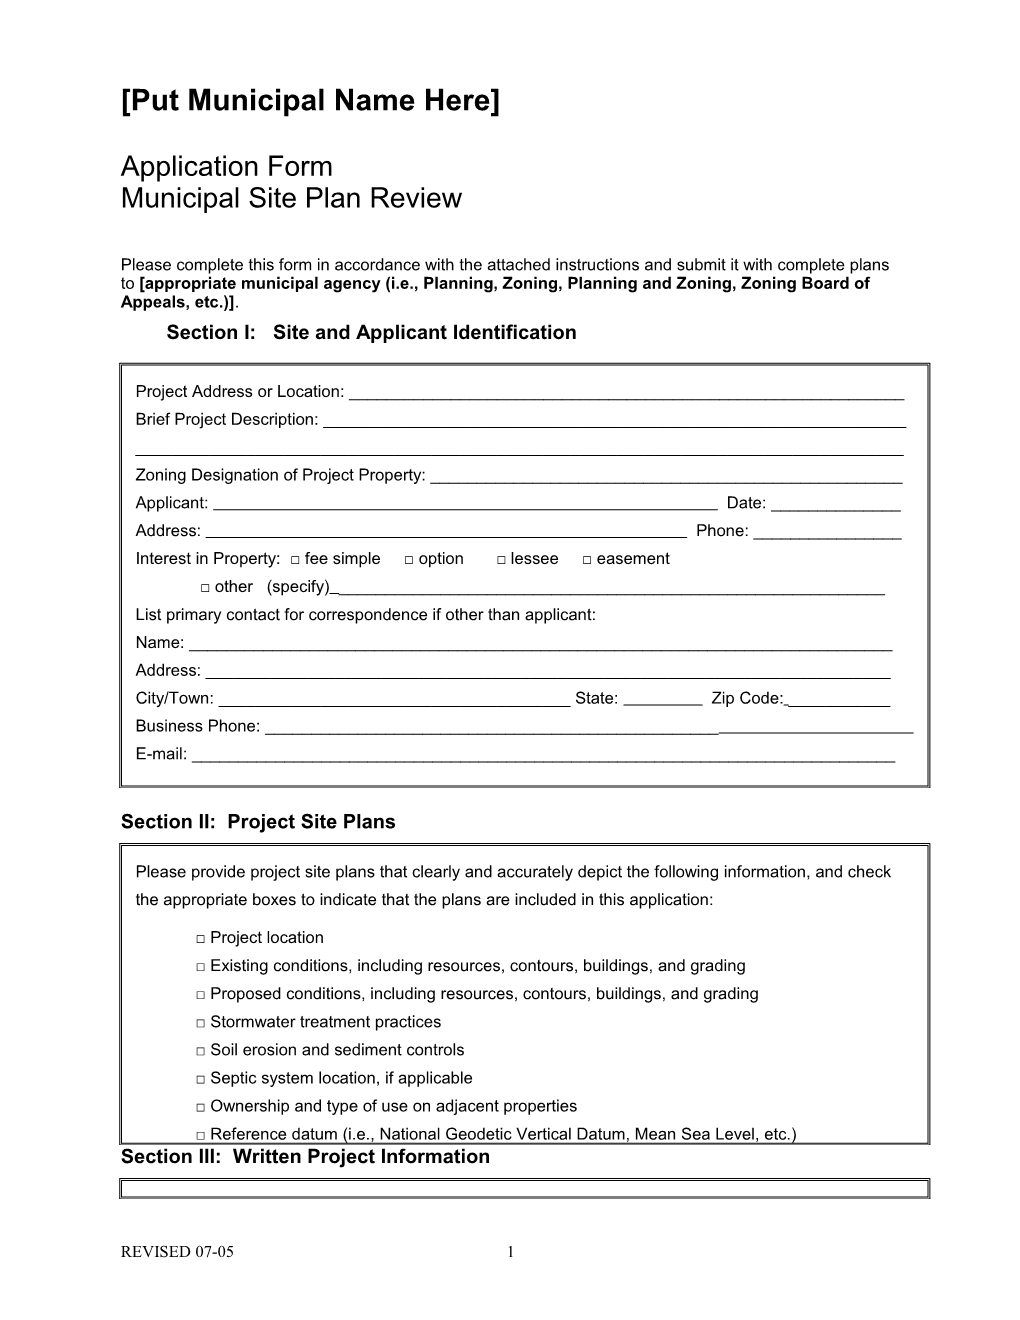 Model Site Plan Application Form - Word Version